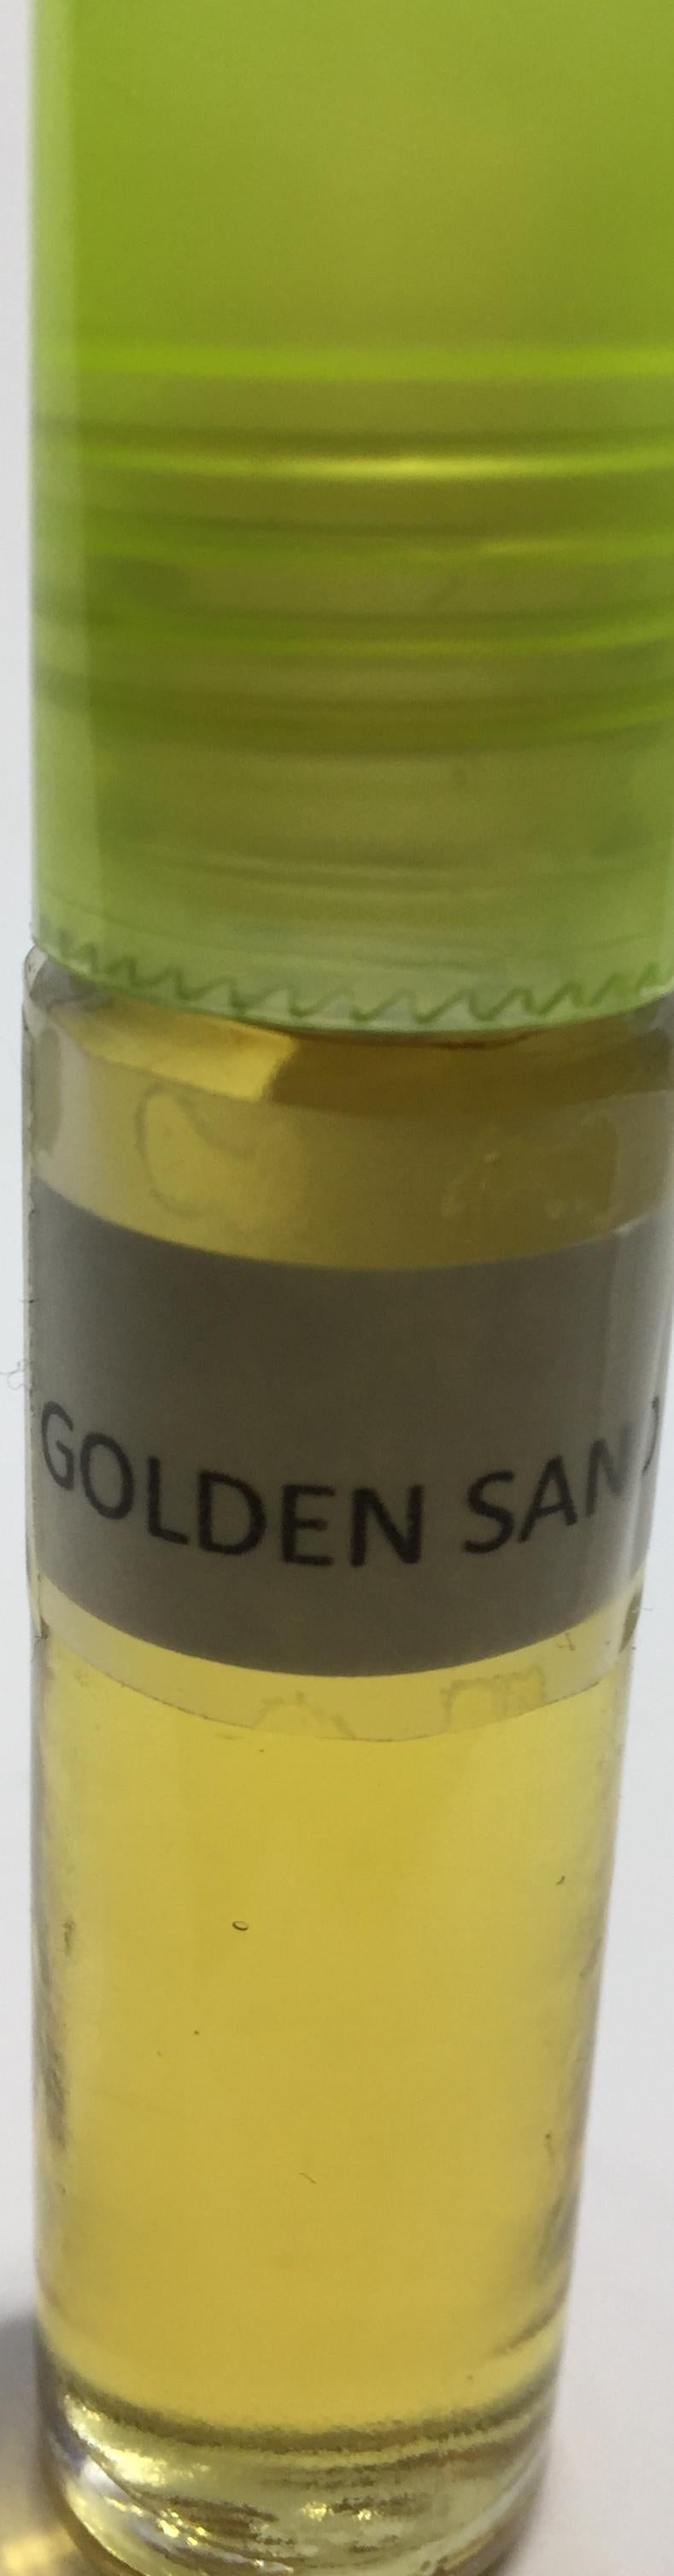 Premium OJ Wholesale Unisex Body Oil Fragrance (Golden Sand, 8 oz.)